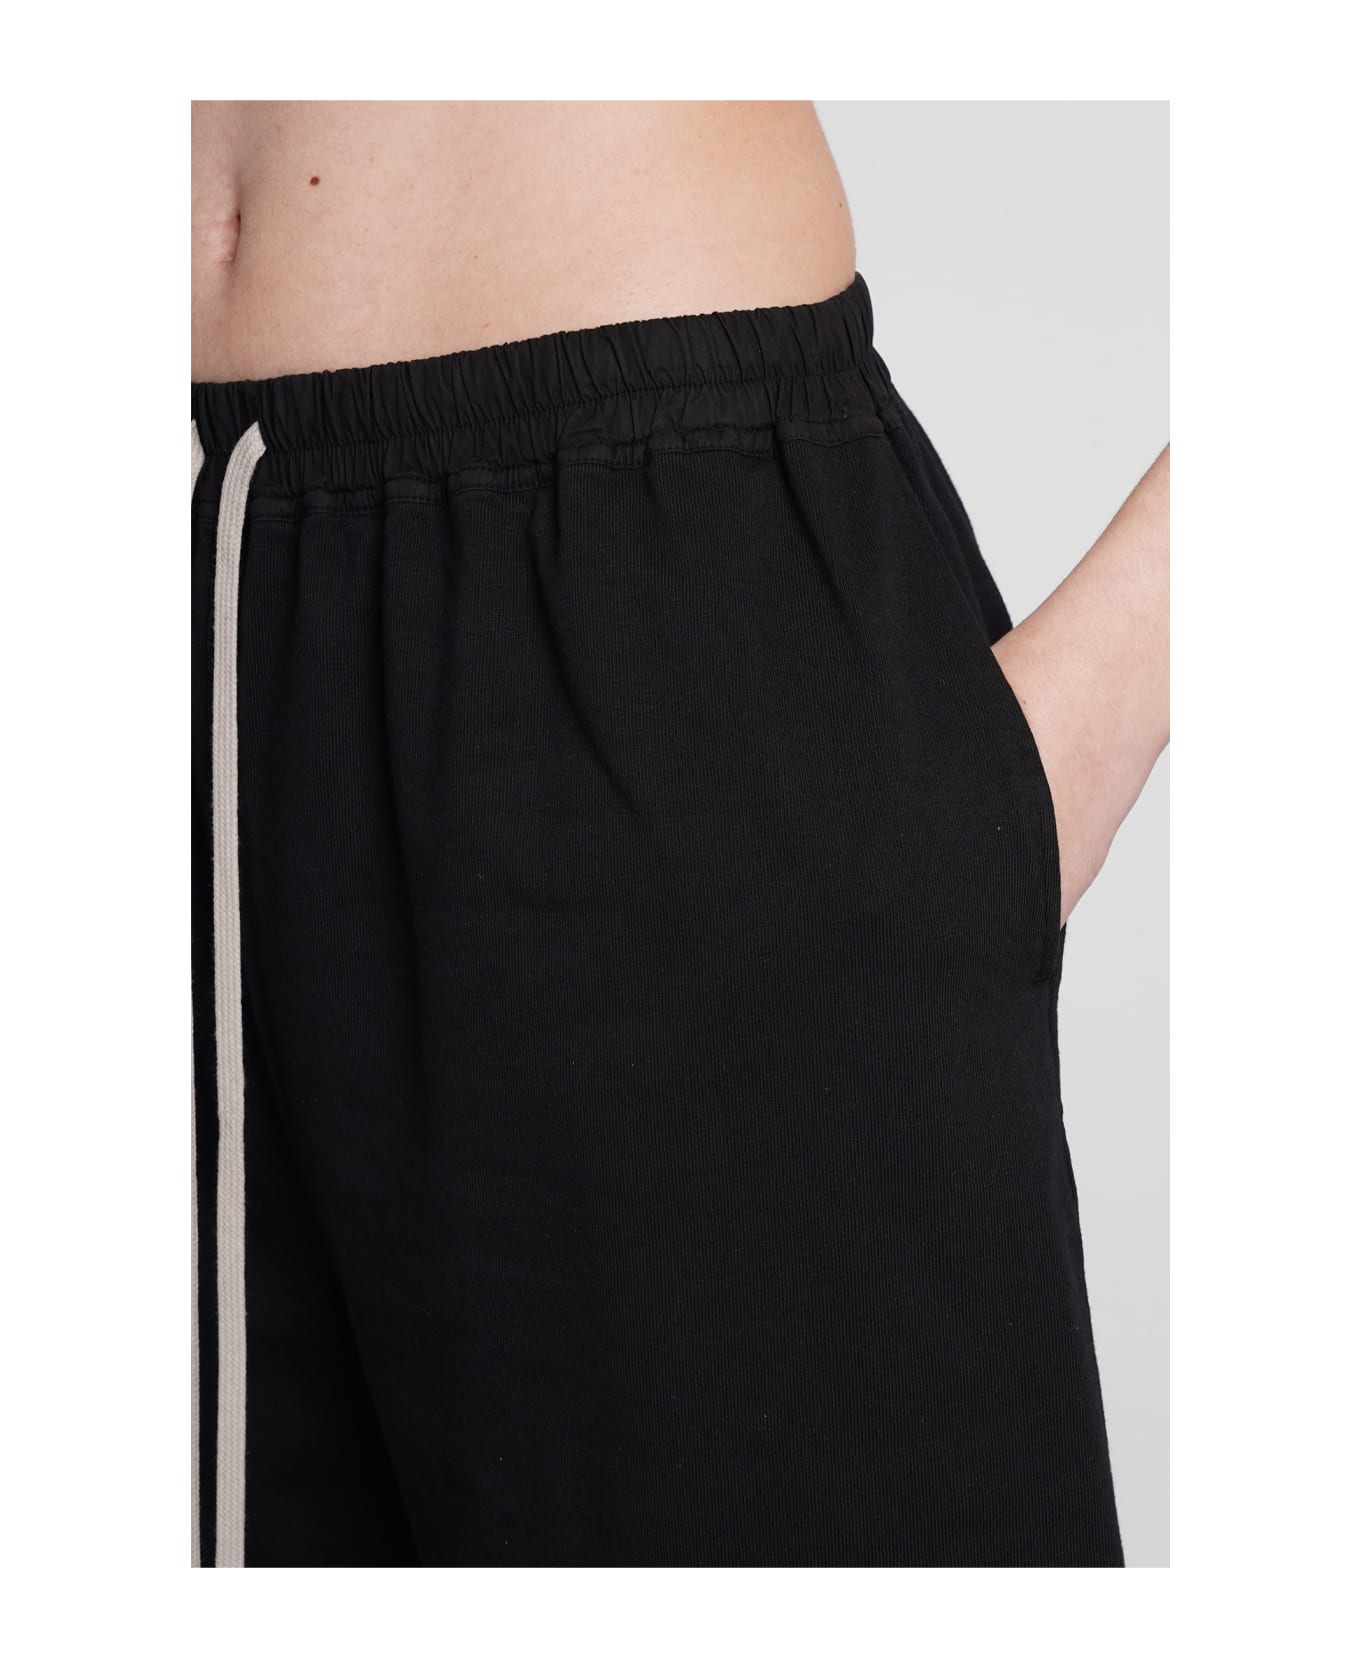 DRKSHDW Boxers Shorts In Black Cotton - black